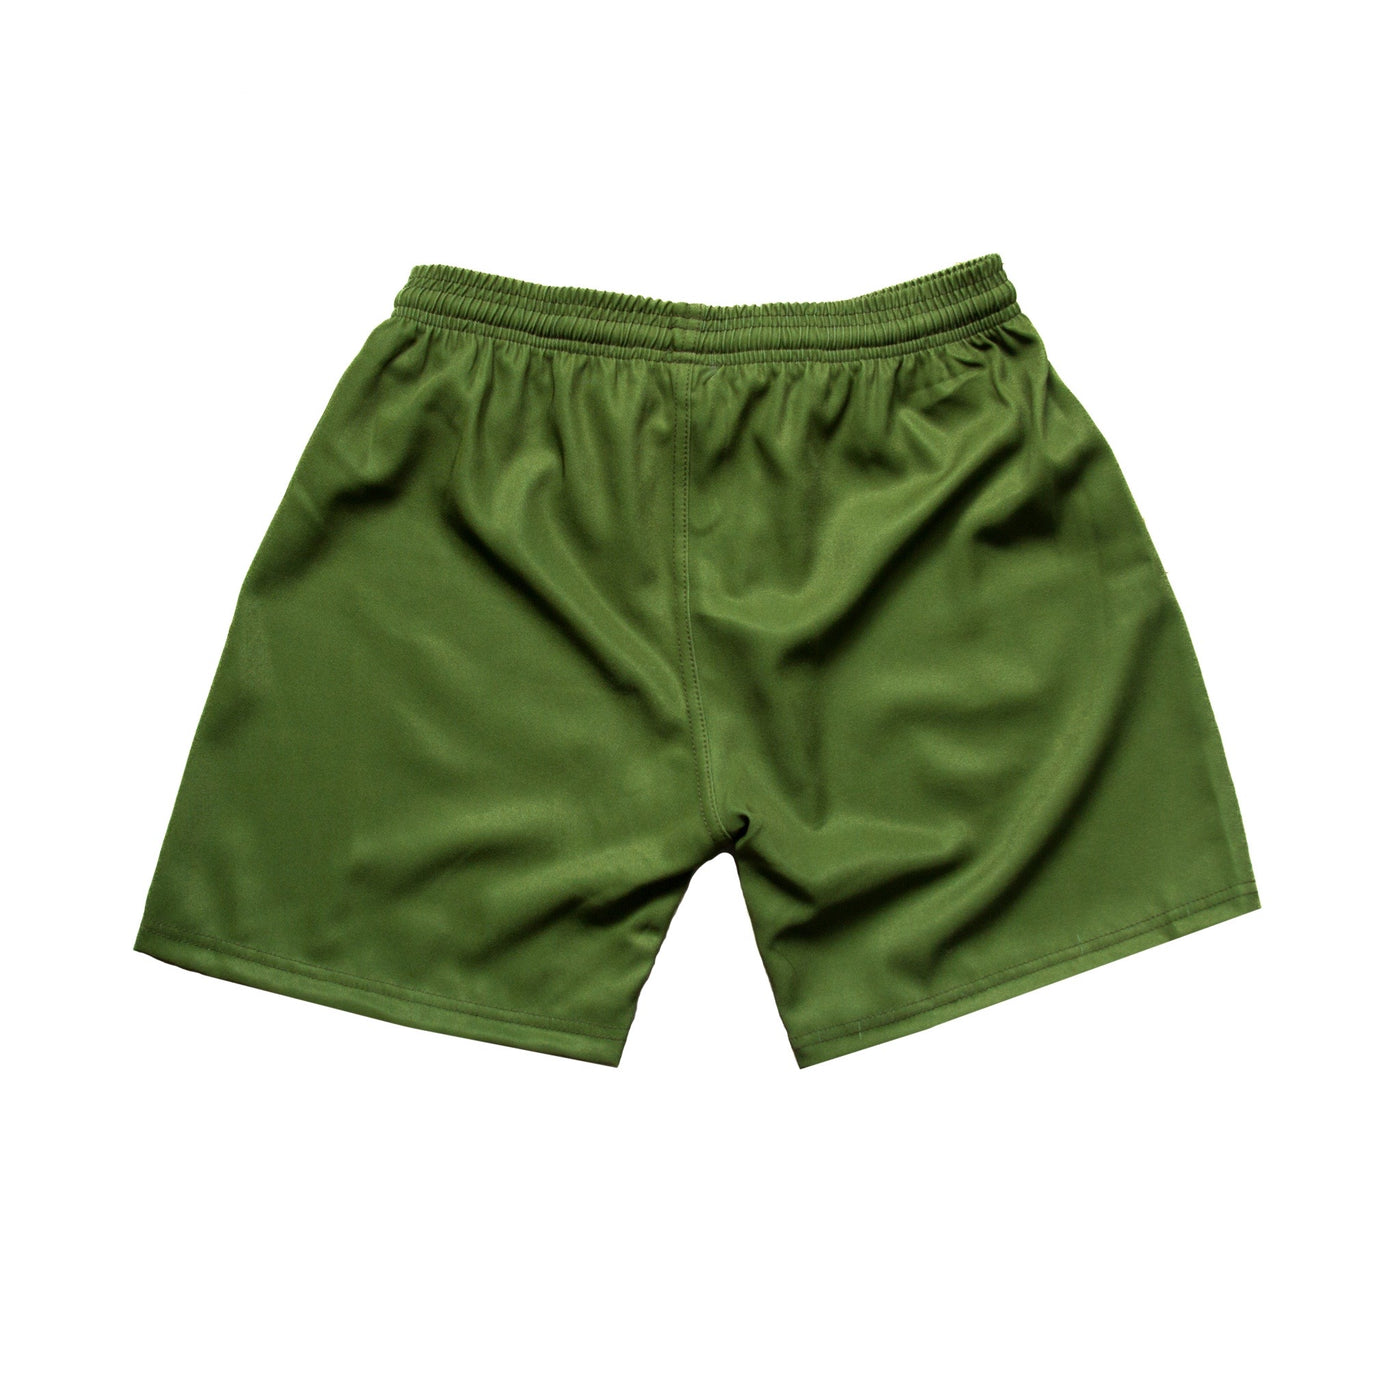 Green Lamb Ultimate Contour City Shorts - Capri - SG19758